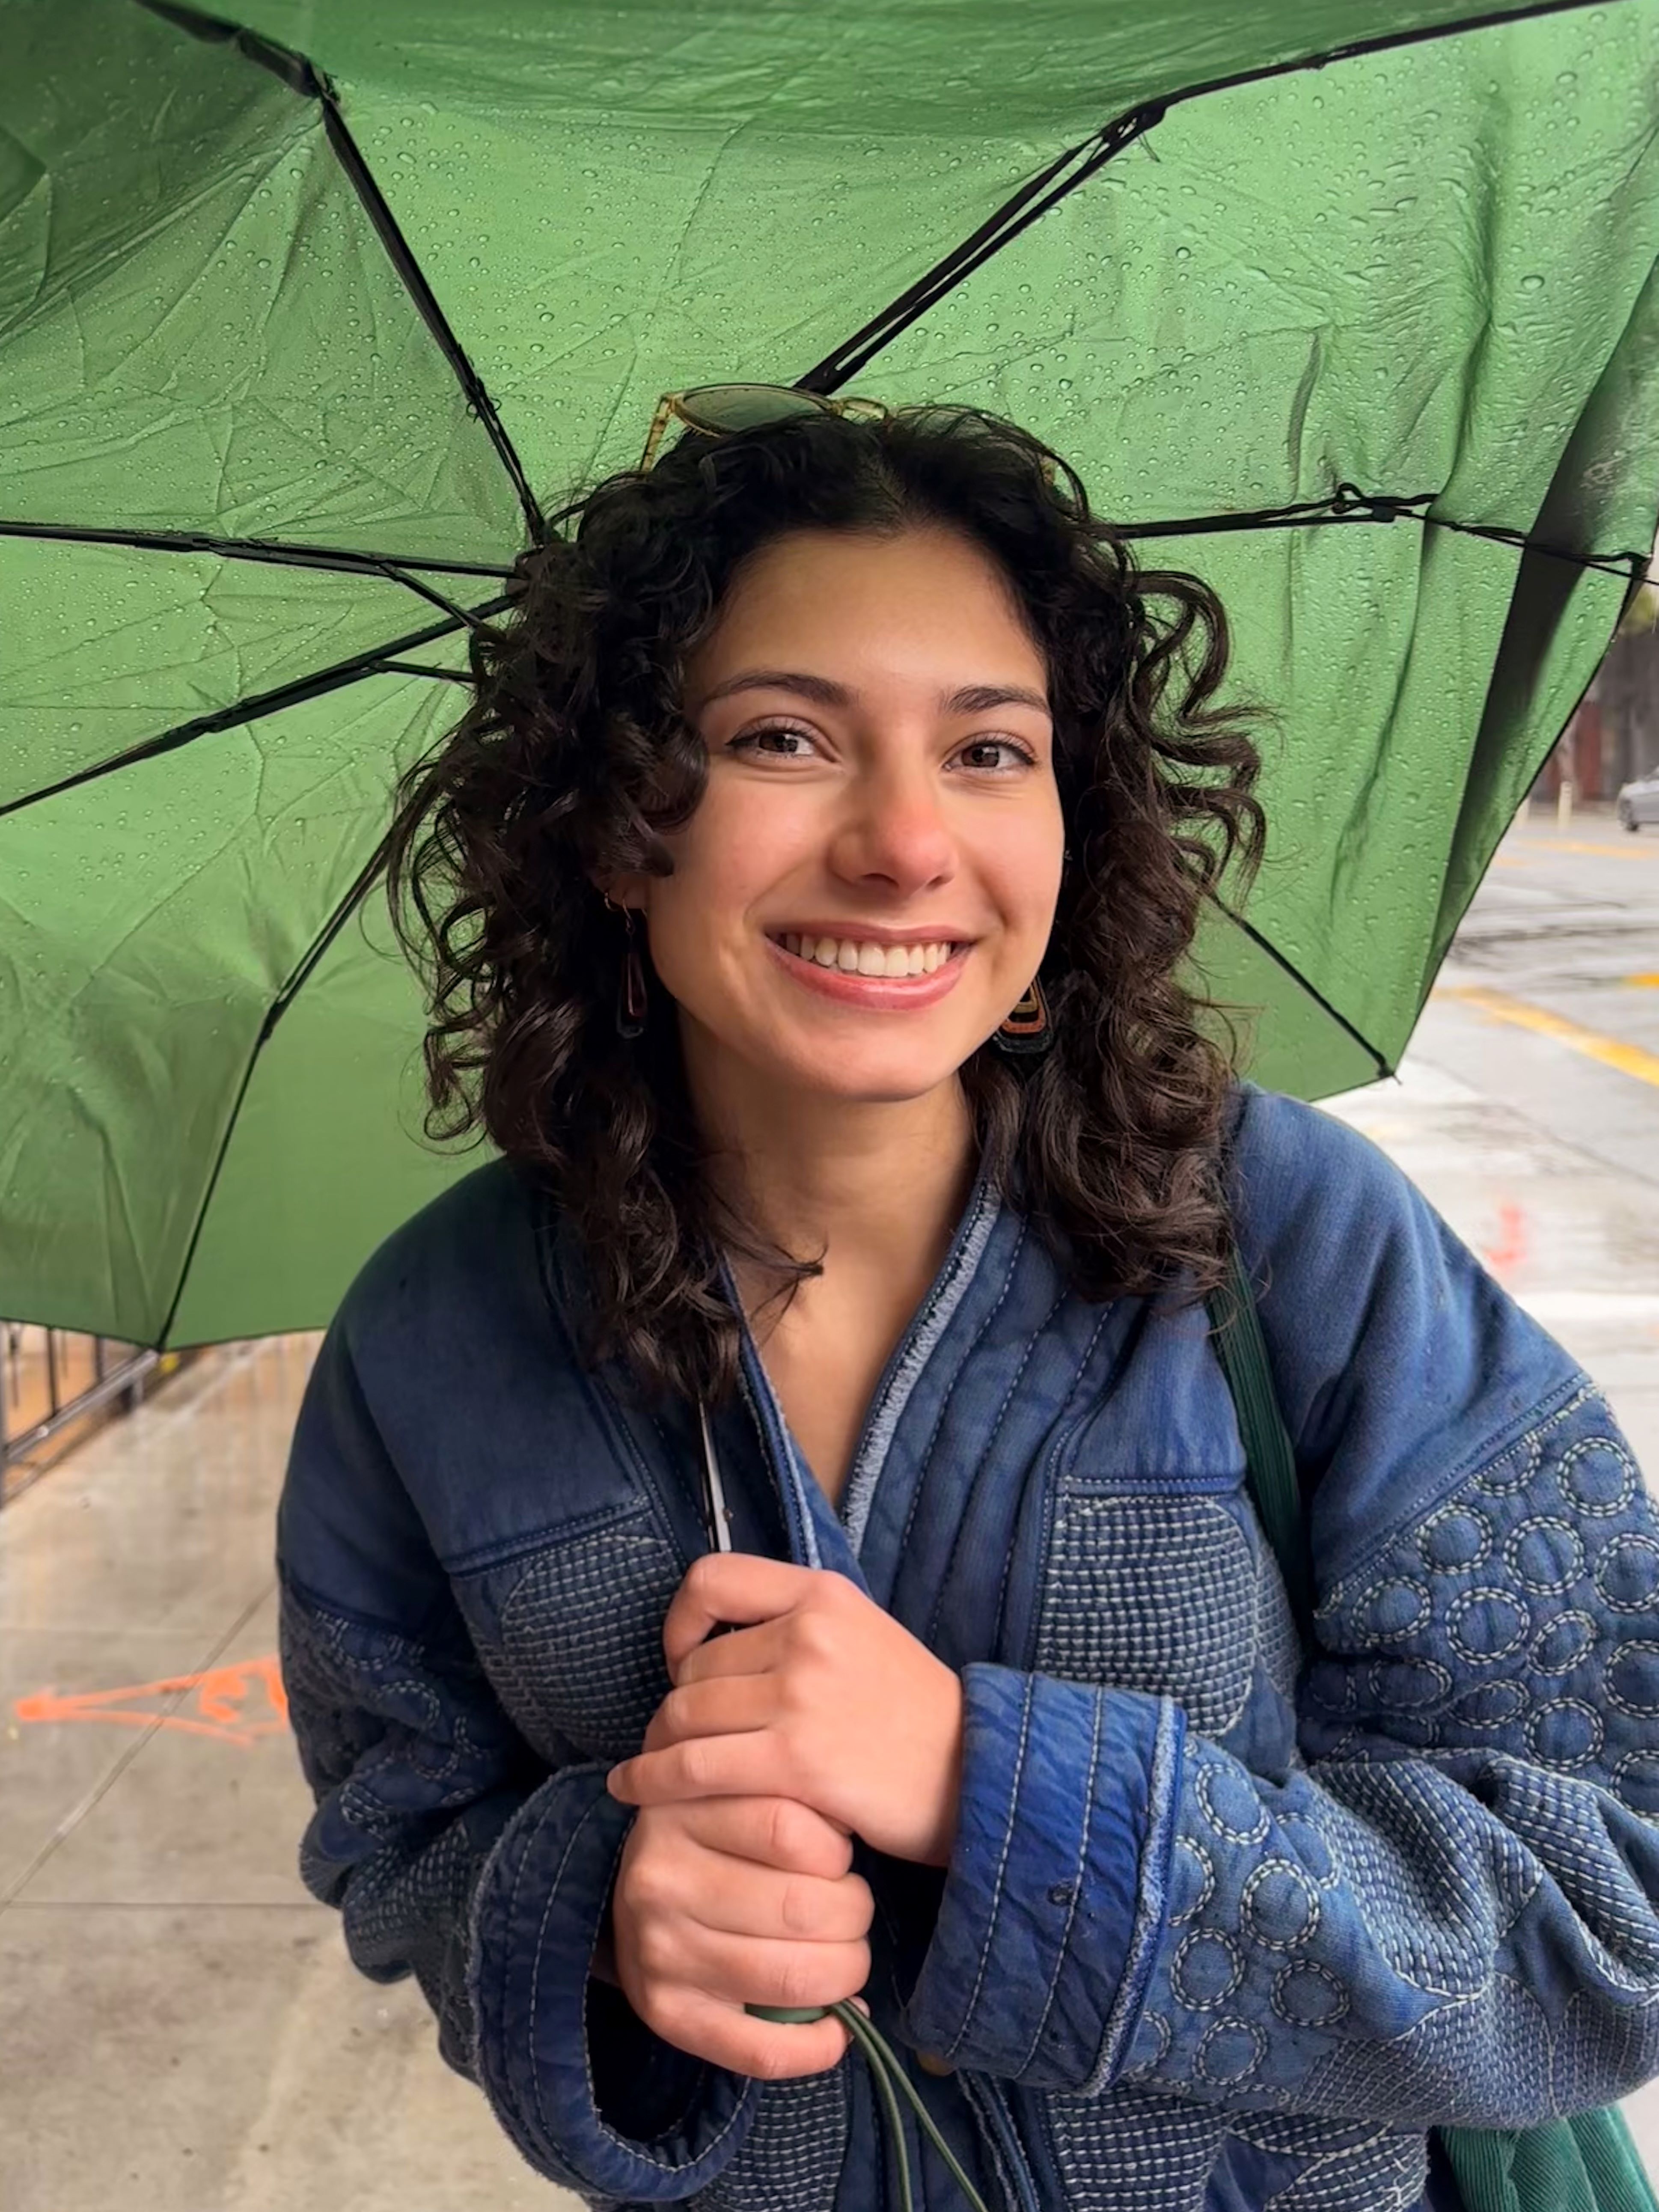 A student standing under a green umbrella